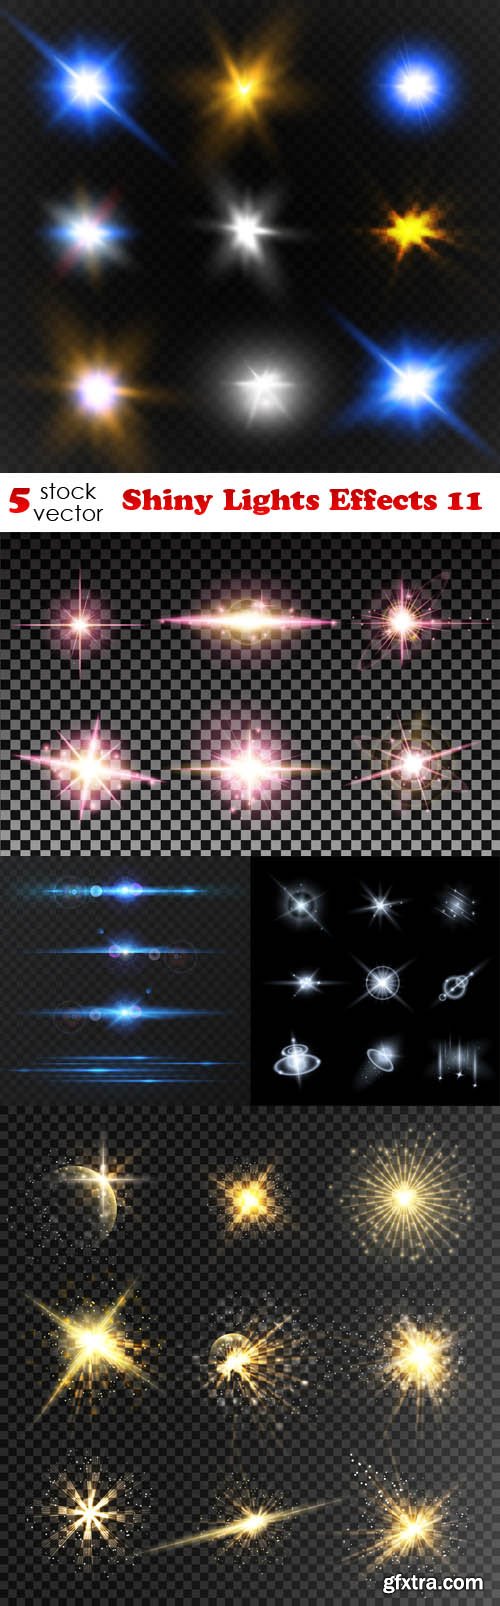 Vectors - Shiny Lights Effects 11